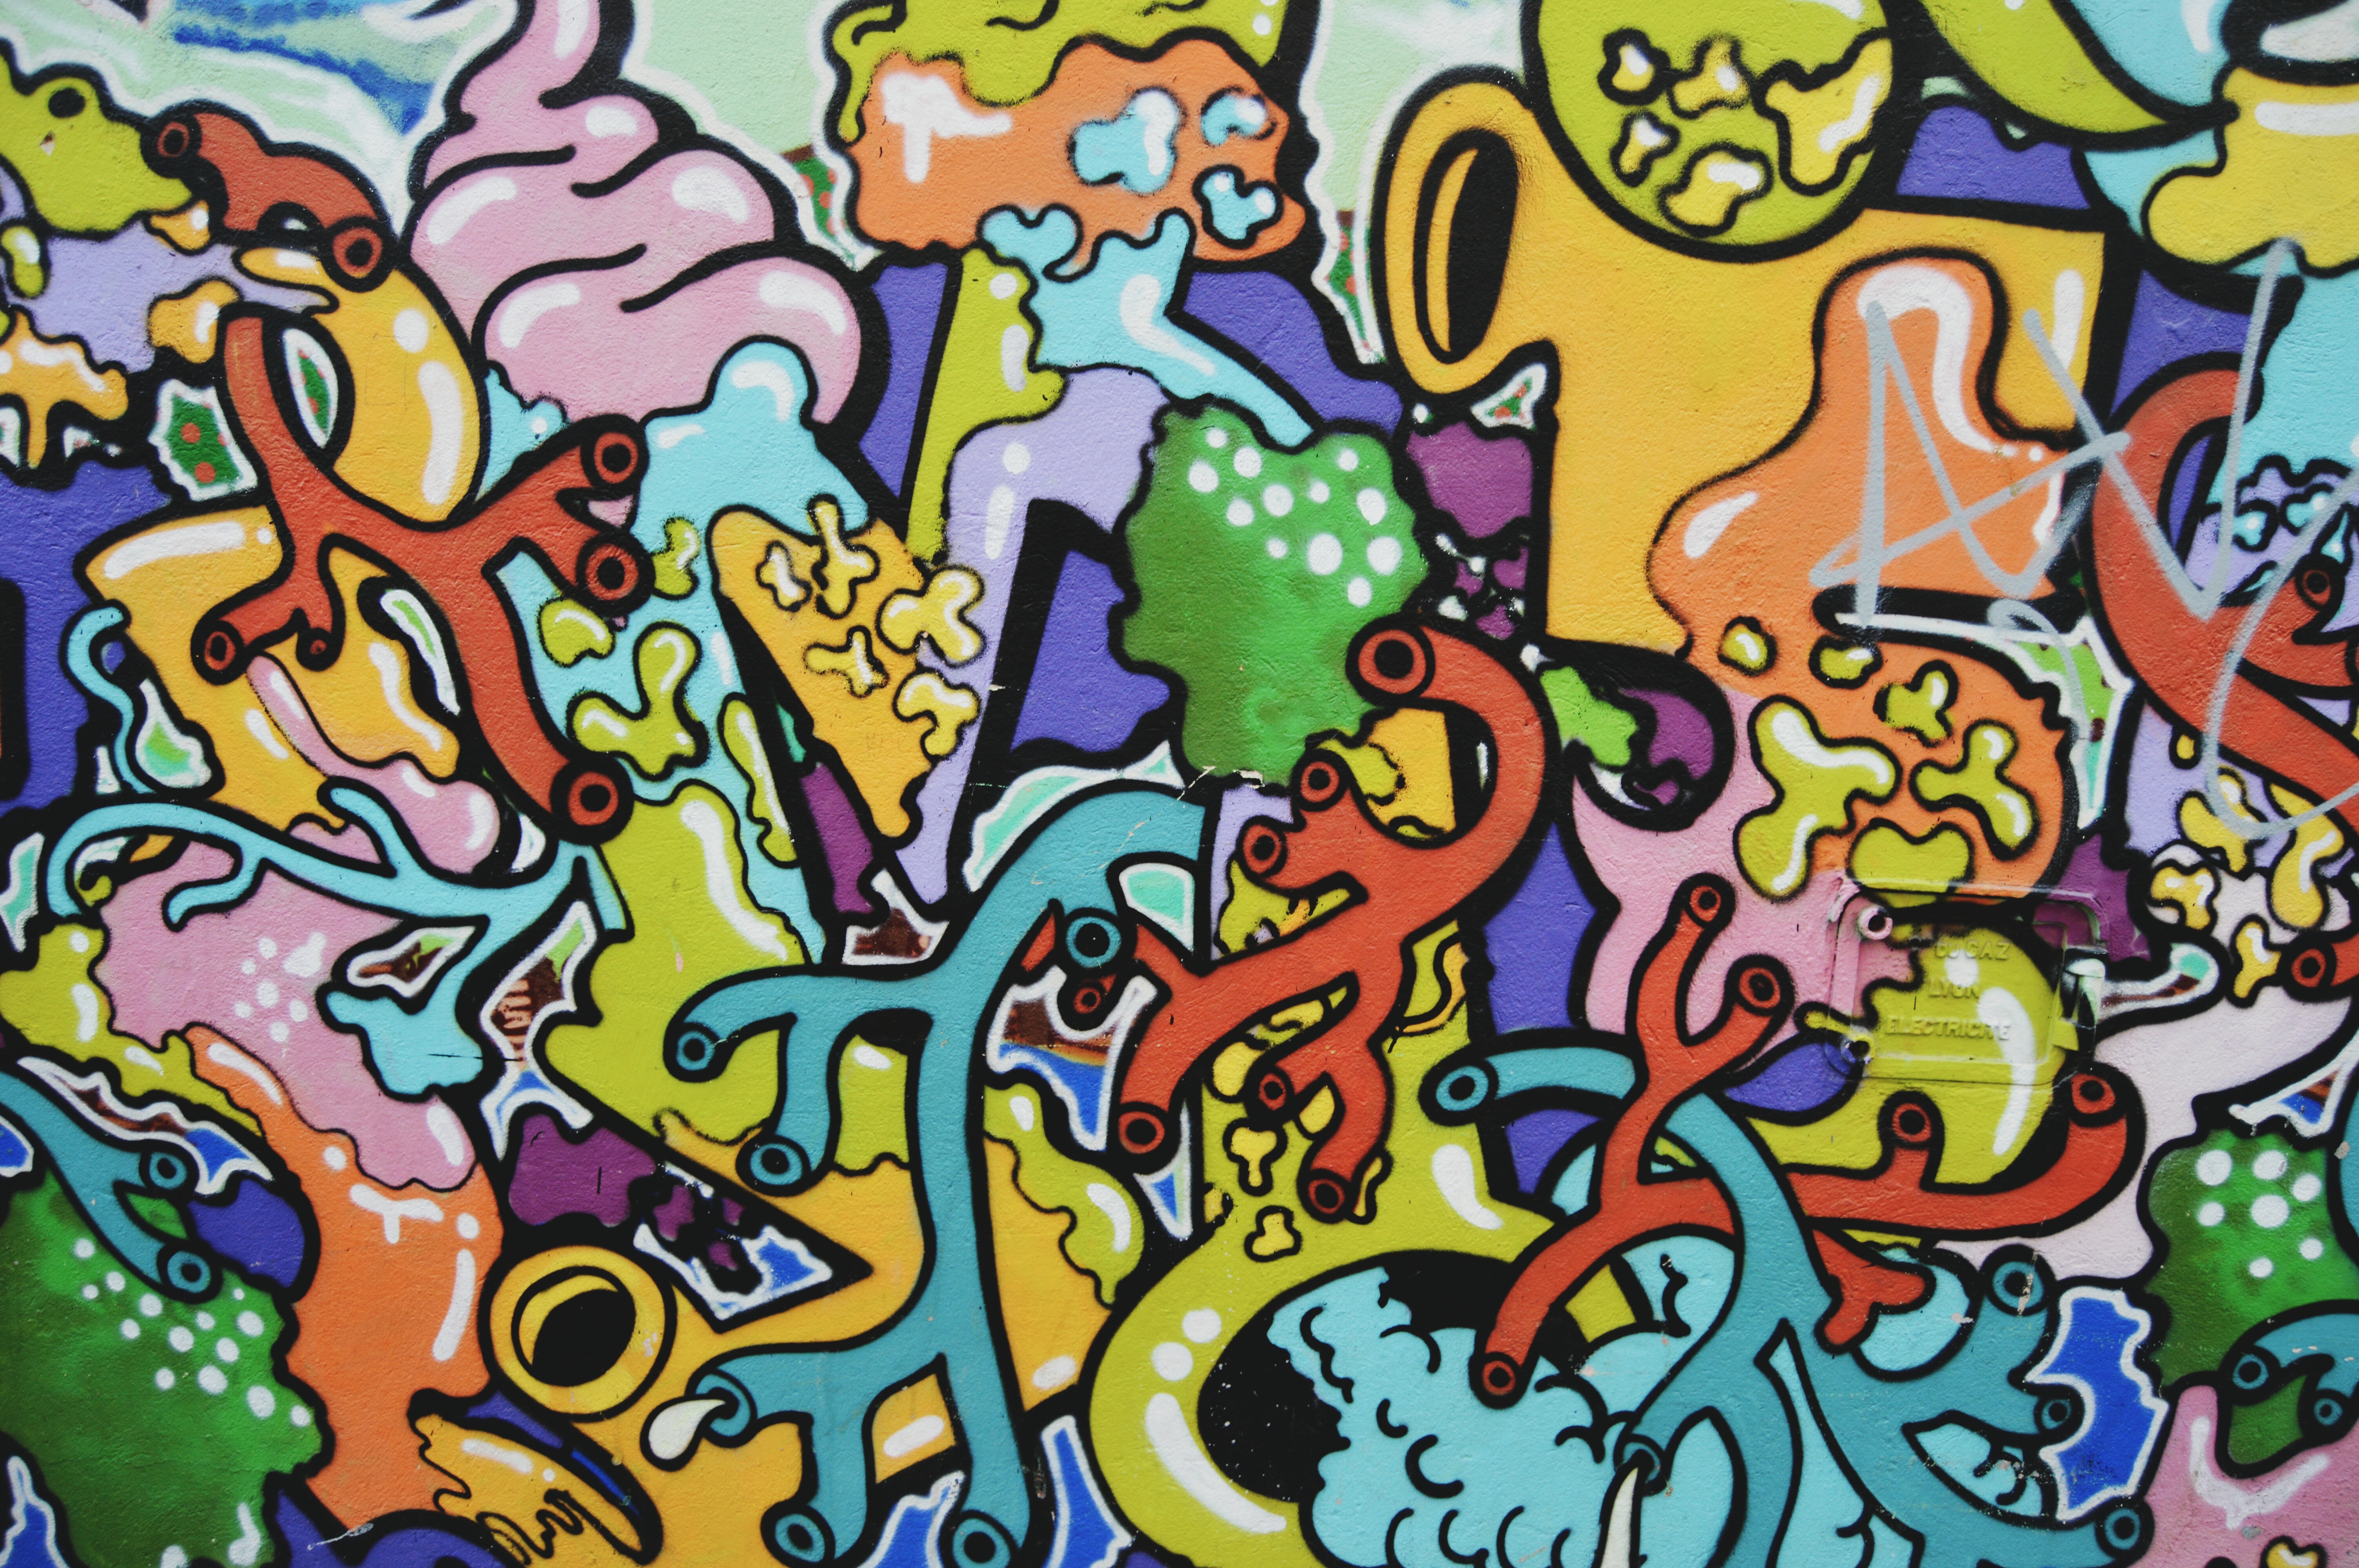 6016x4000 #graffiti, #colourful, #urban art, #painting, #colour, #wall, #horizontal, #street, #horizontal wallpaper, #bright, #color, # wallpaper, #urban, #abstract, #horizontal background, #modern, #colorful, #Public domain image, #mural